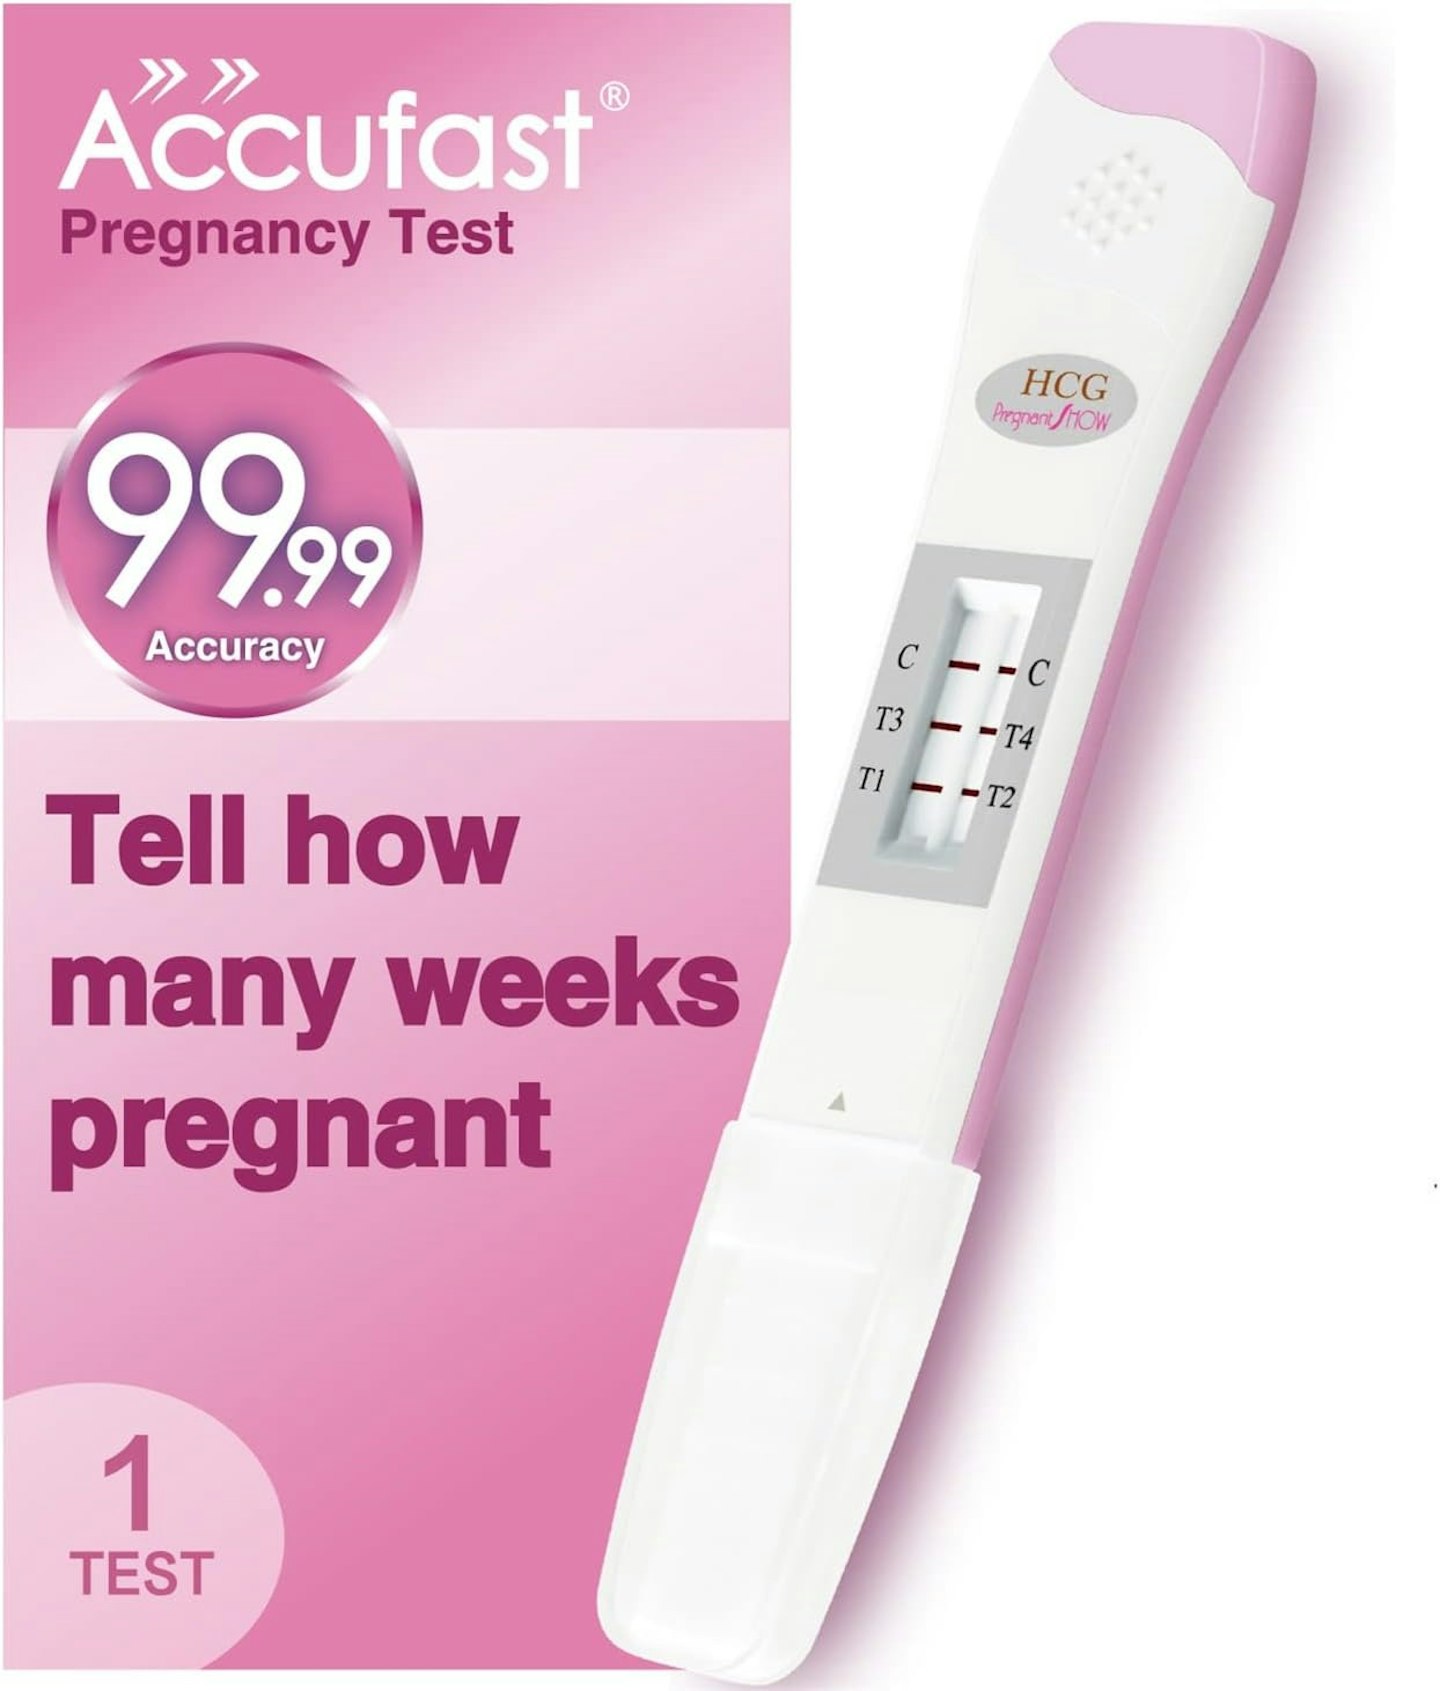 Accufast pregnancy test